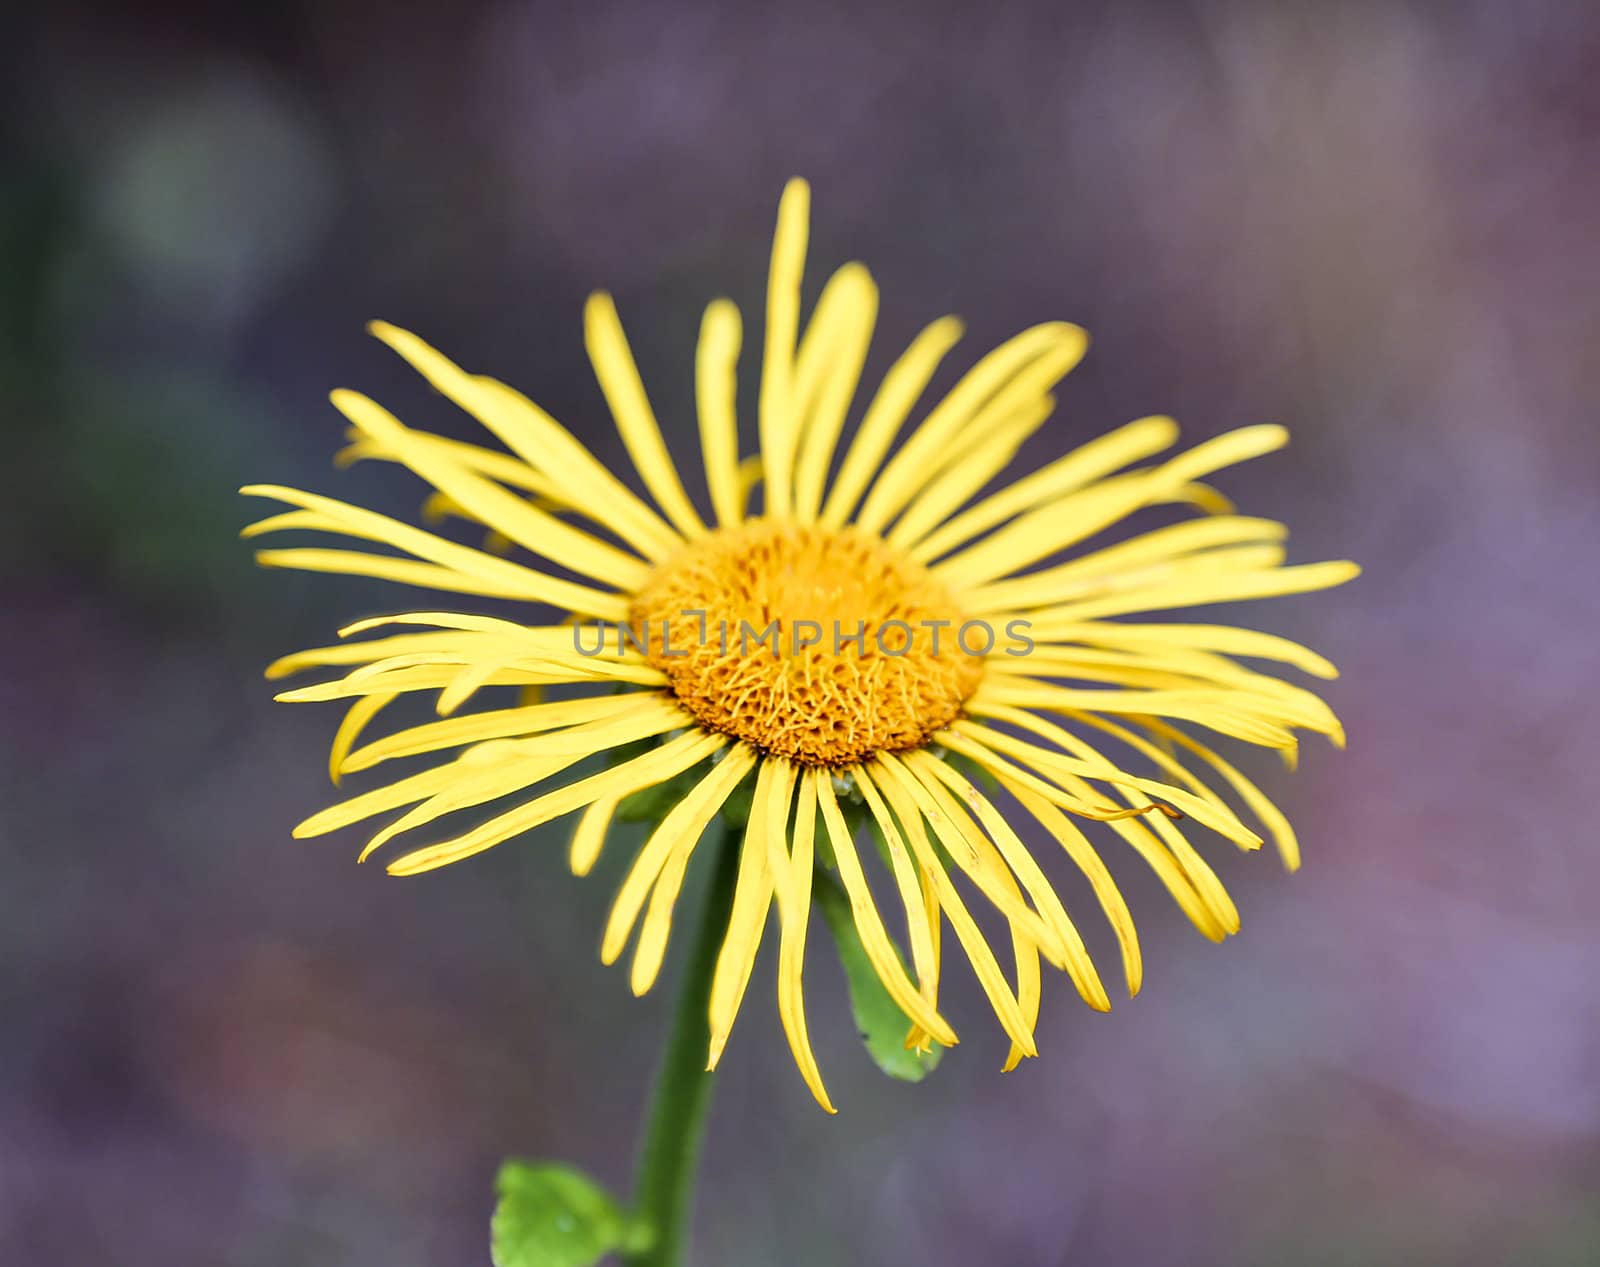 Closeup shot of a single yellow flower